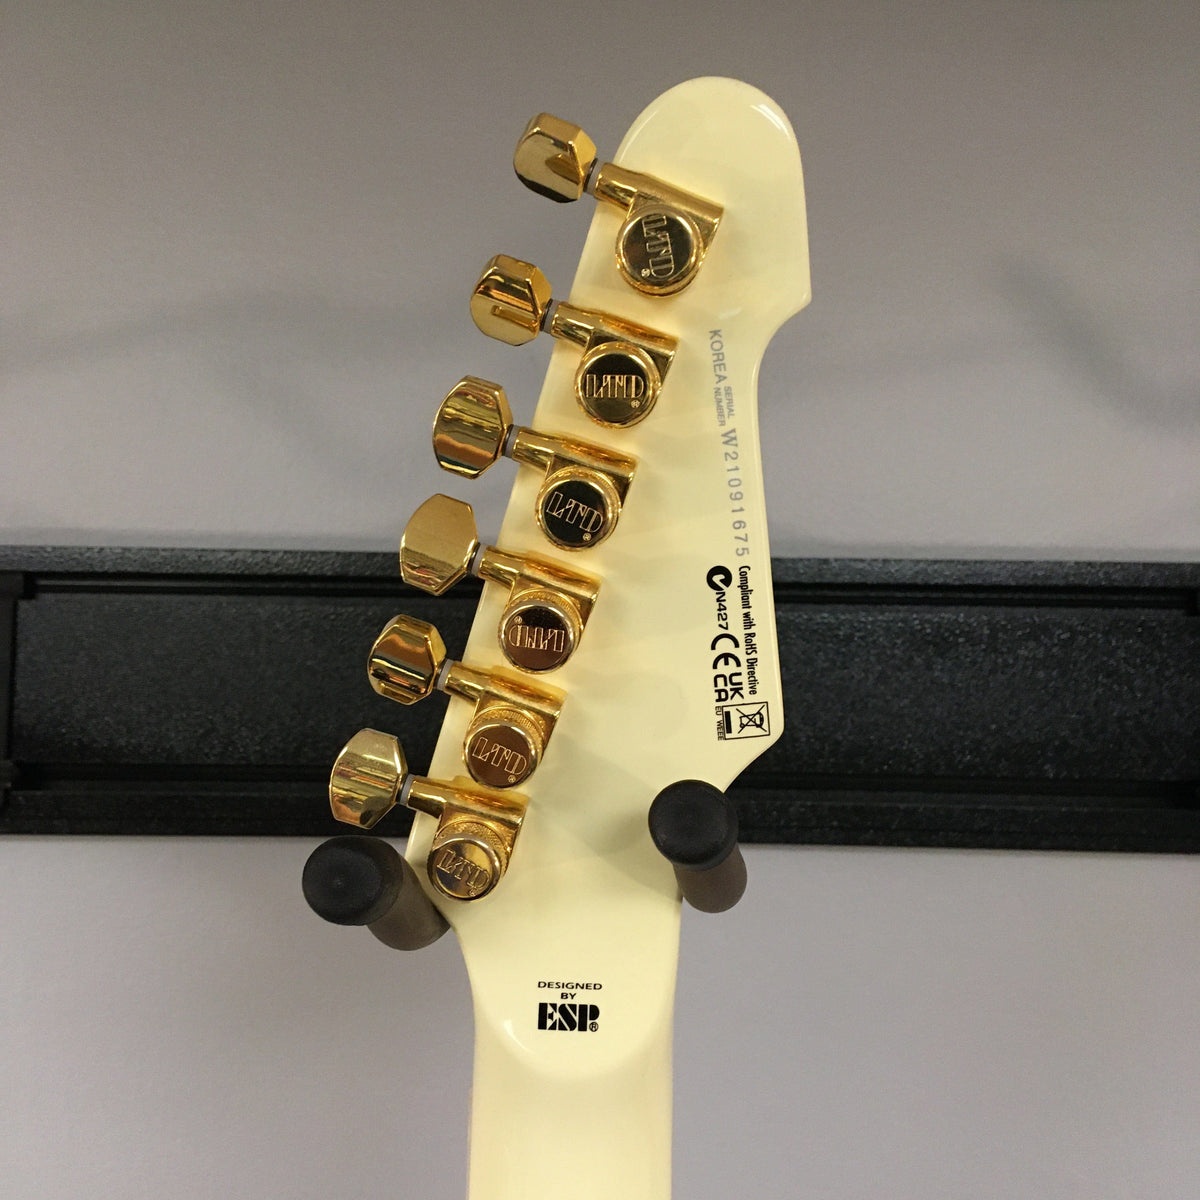 ESP LTD Phoenix-1000 Vintage White Guitars on Main